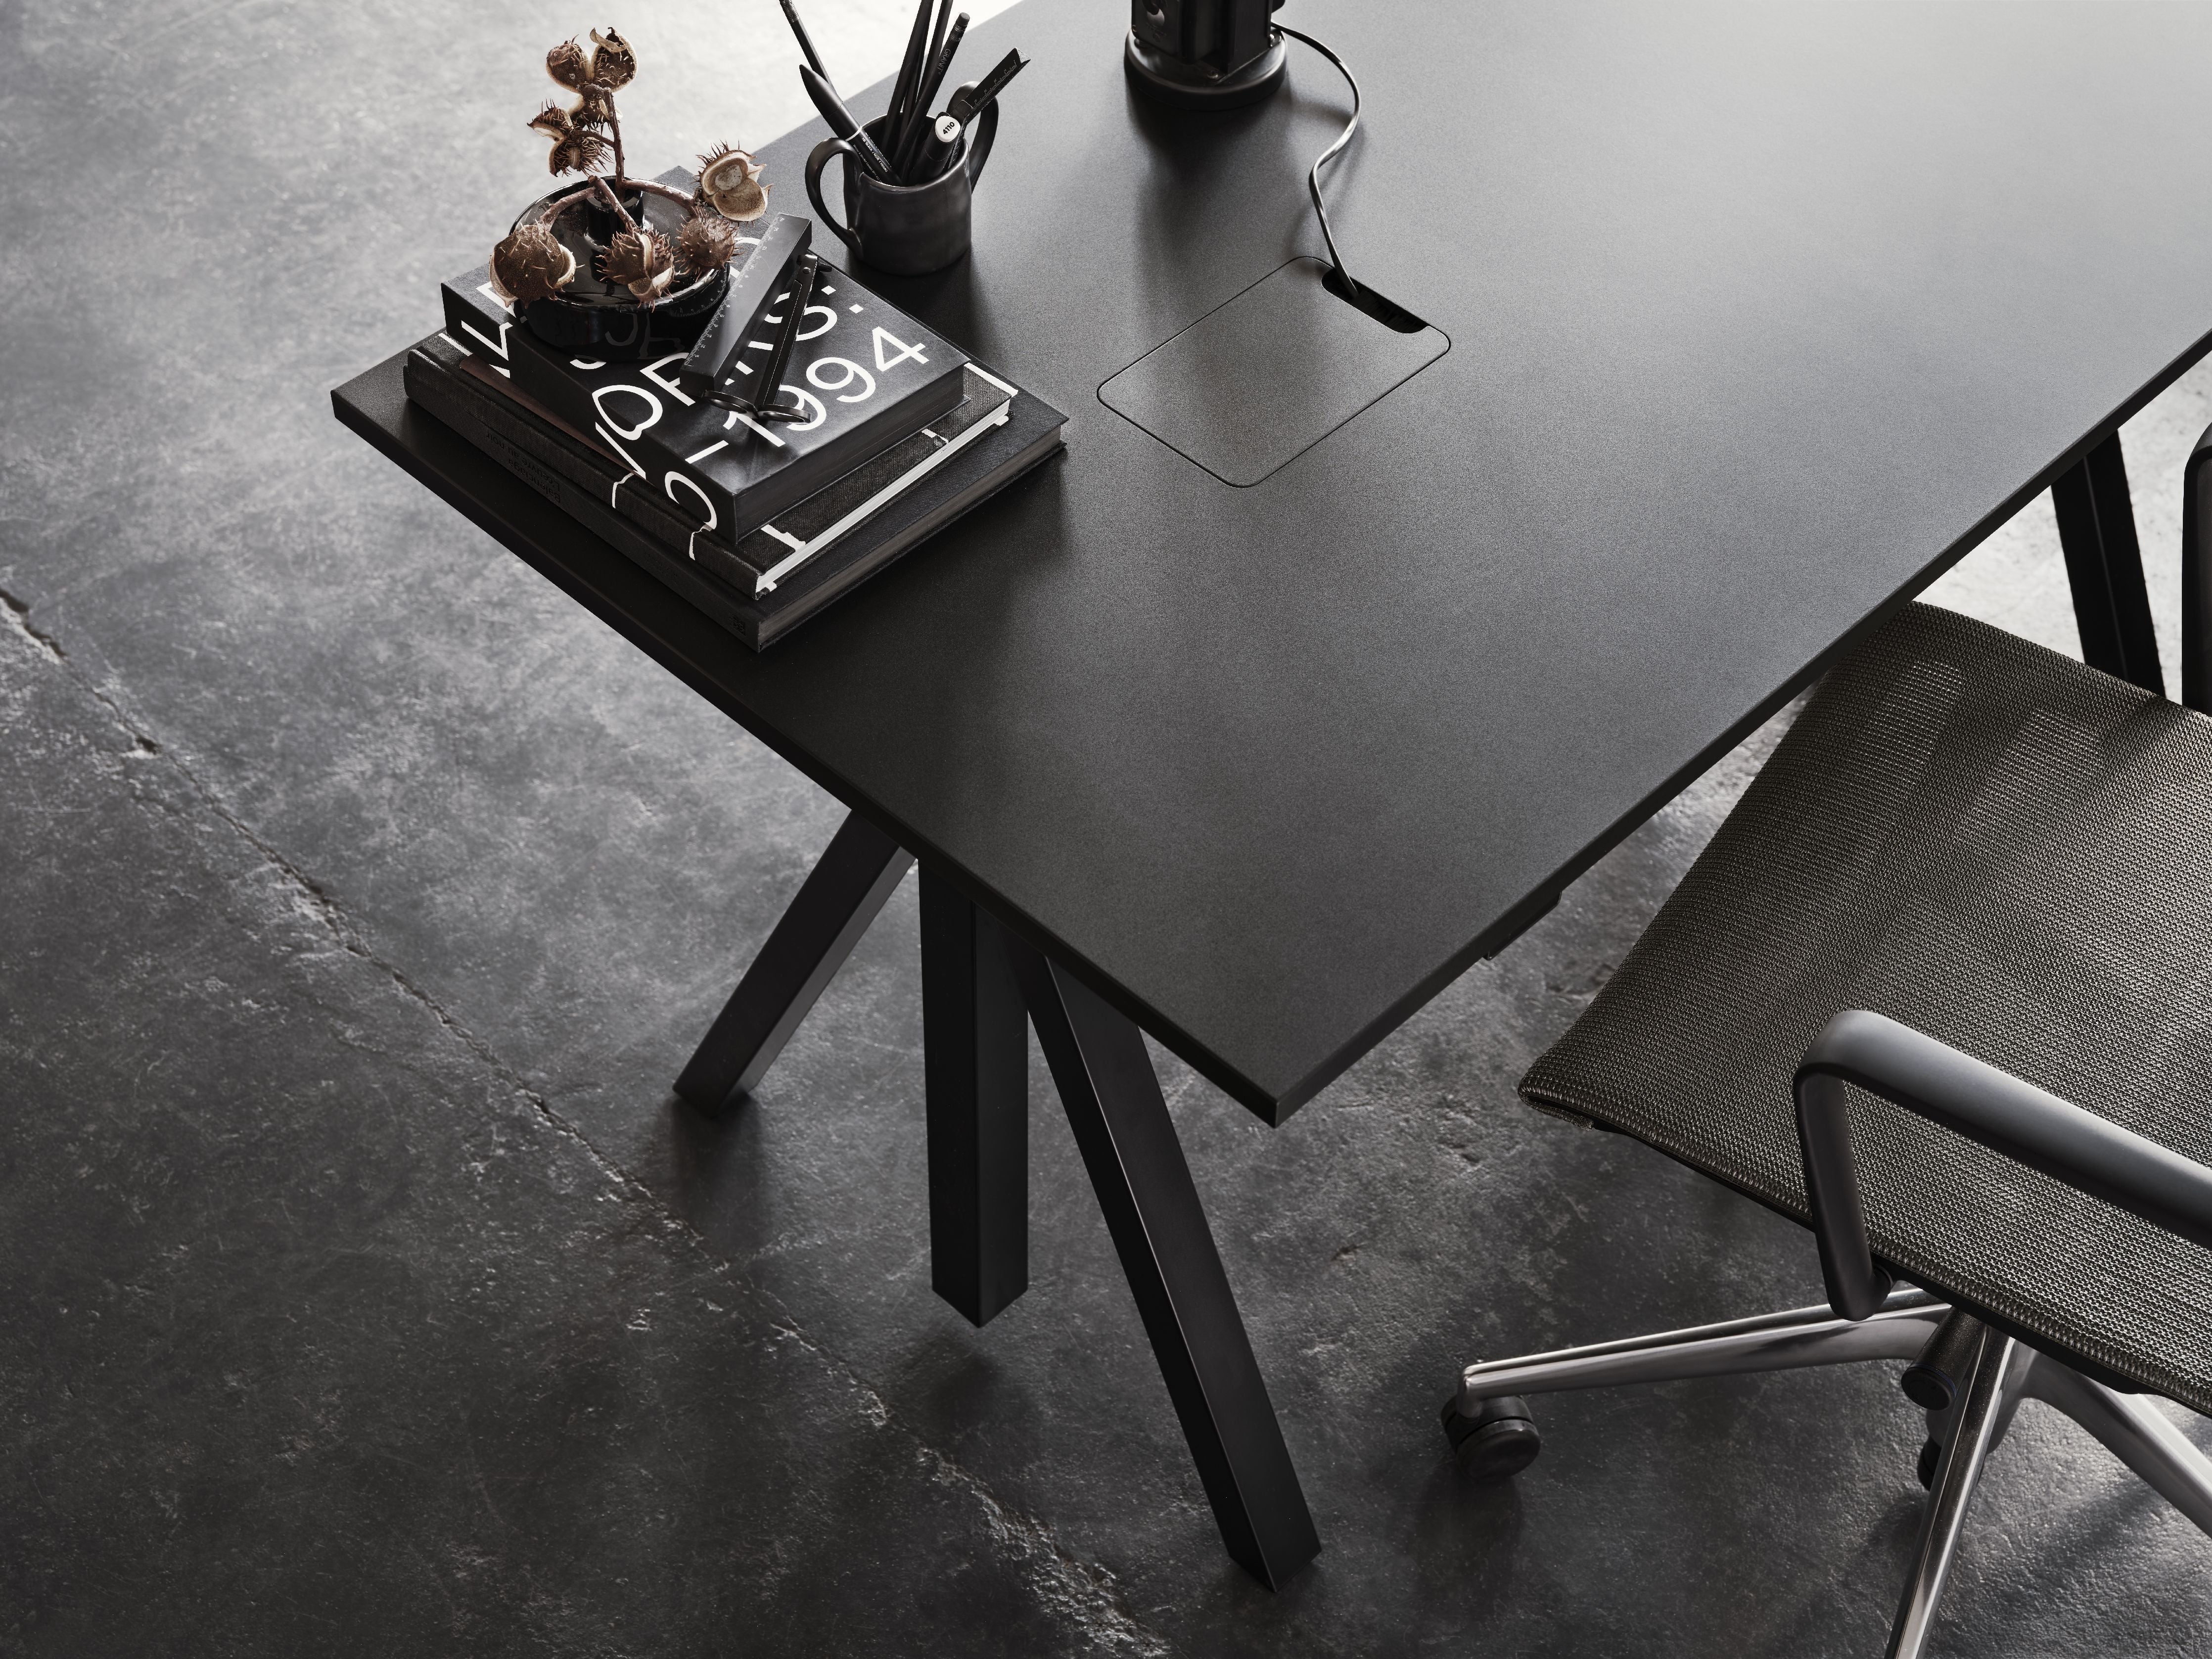 String Furniture Height Adjustable Work Table 78x120 Cm, Black/Black